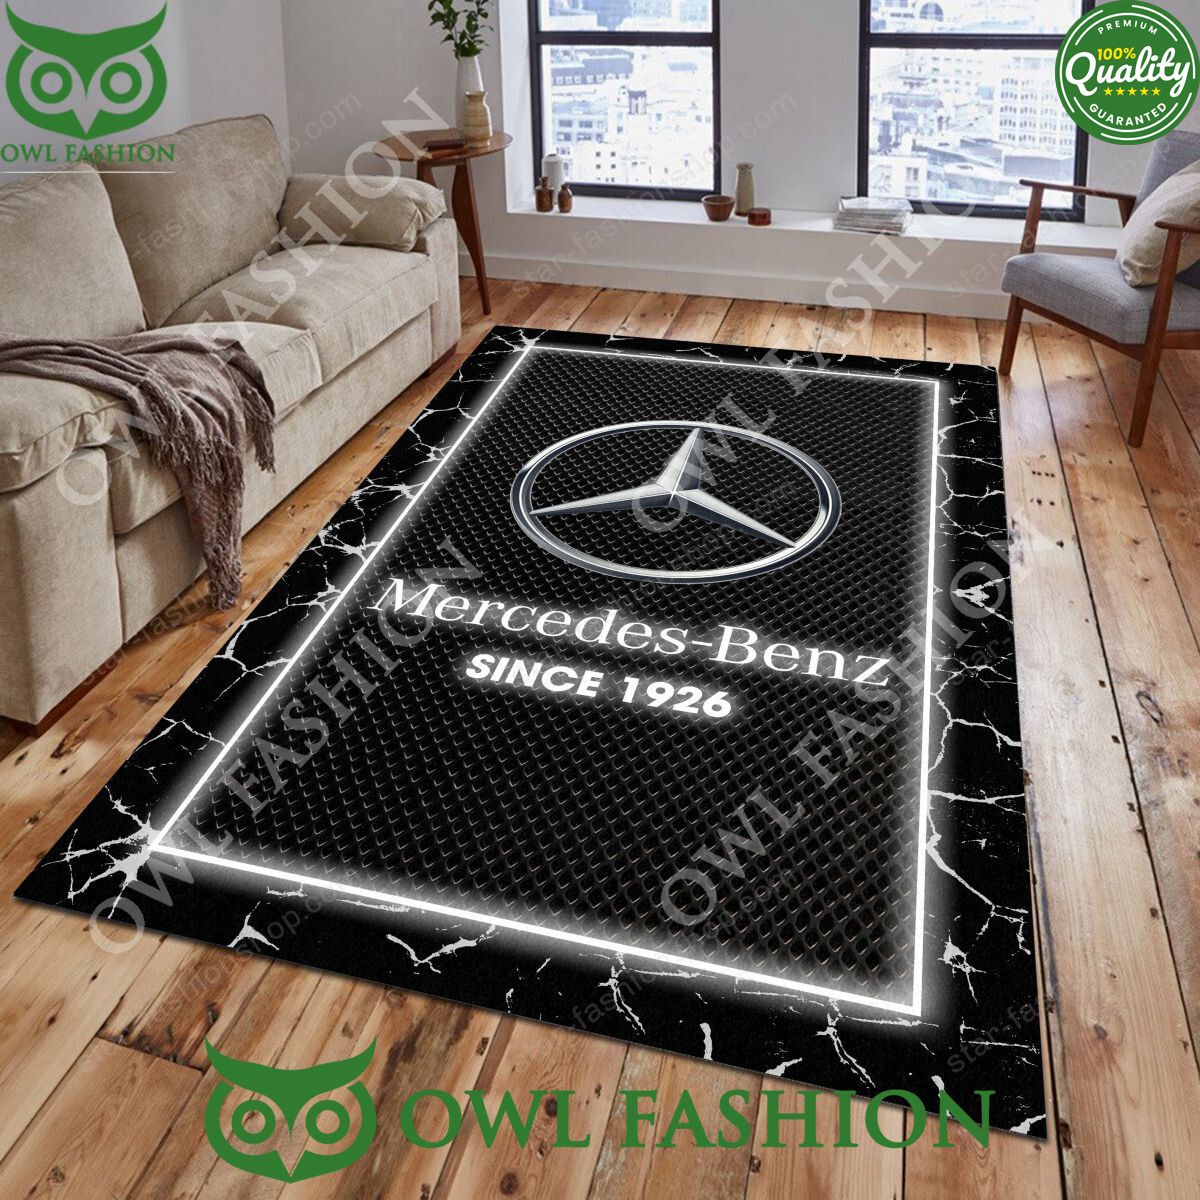 mercedes benz german commercial automotive rug carpet decor living room 1 vAhdl.jpg